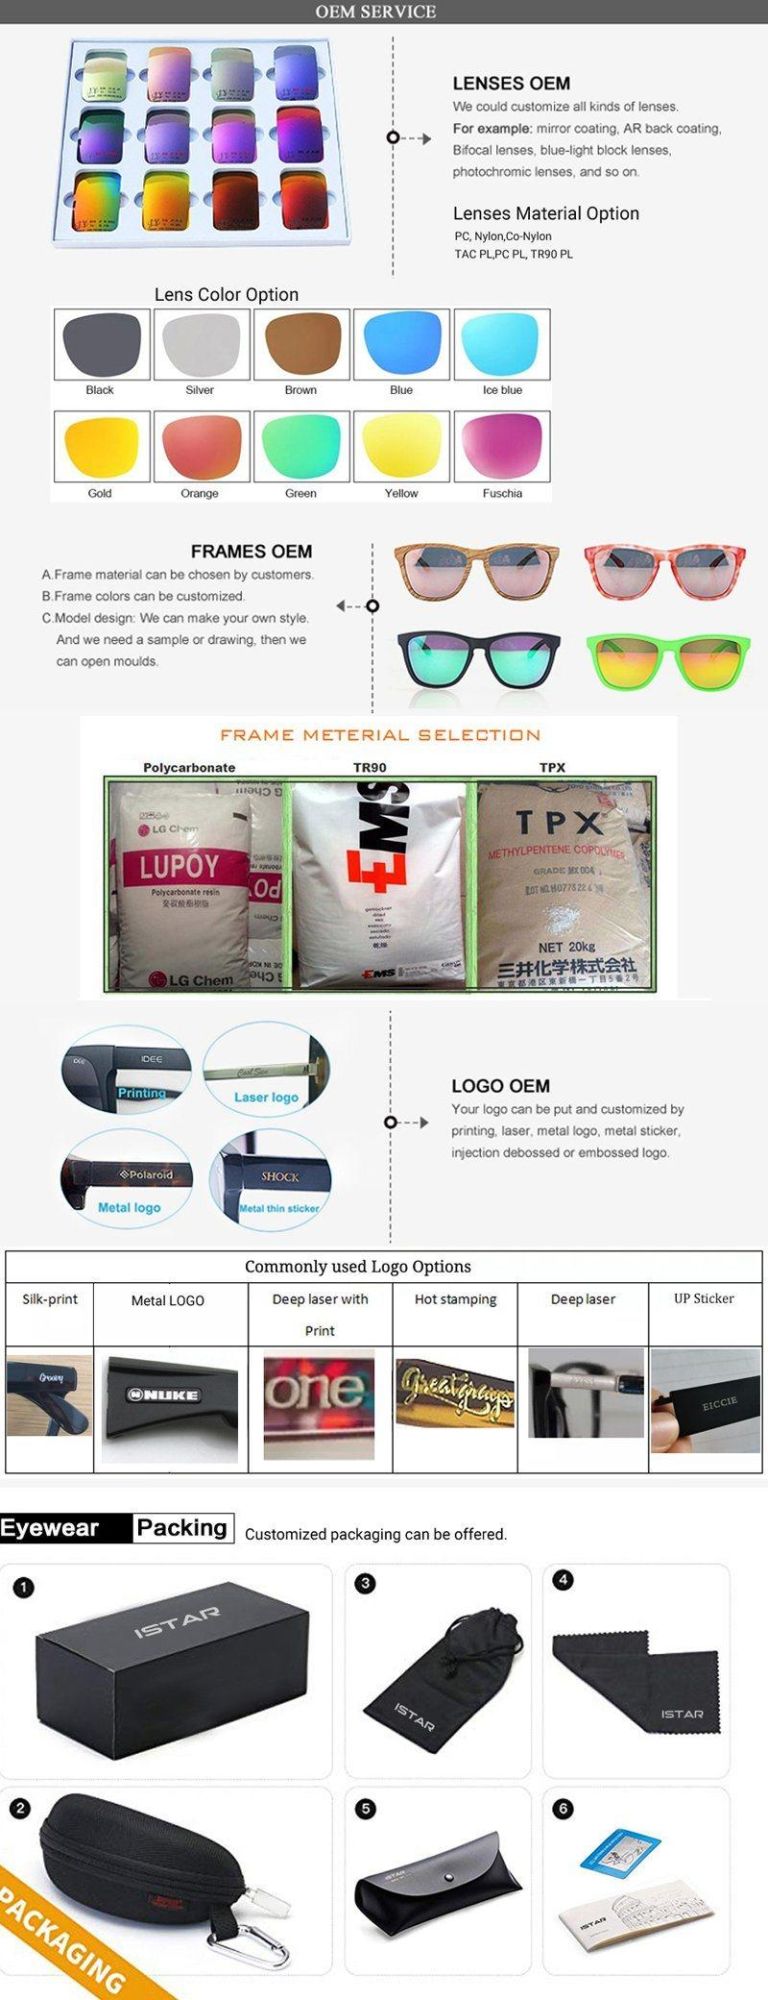 Fashion Unbreakable Plastic CE UV400 Mirror Lens Kids Children Sunglasses